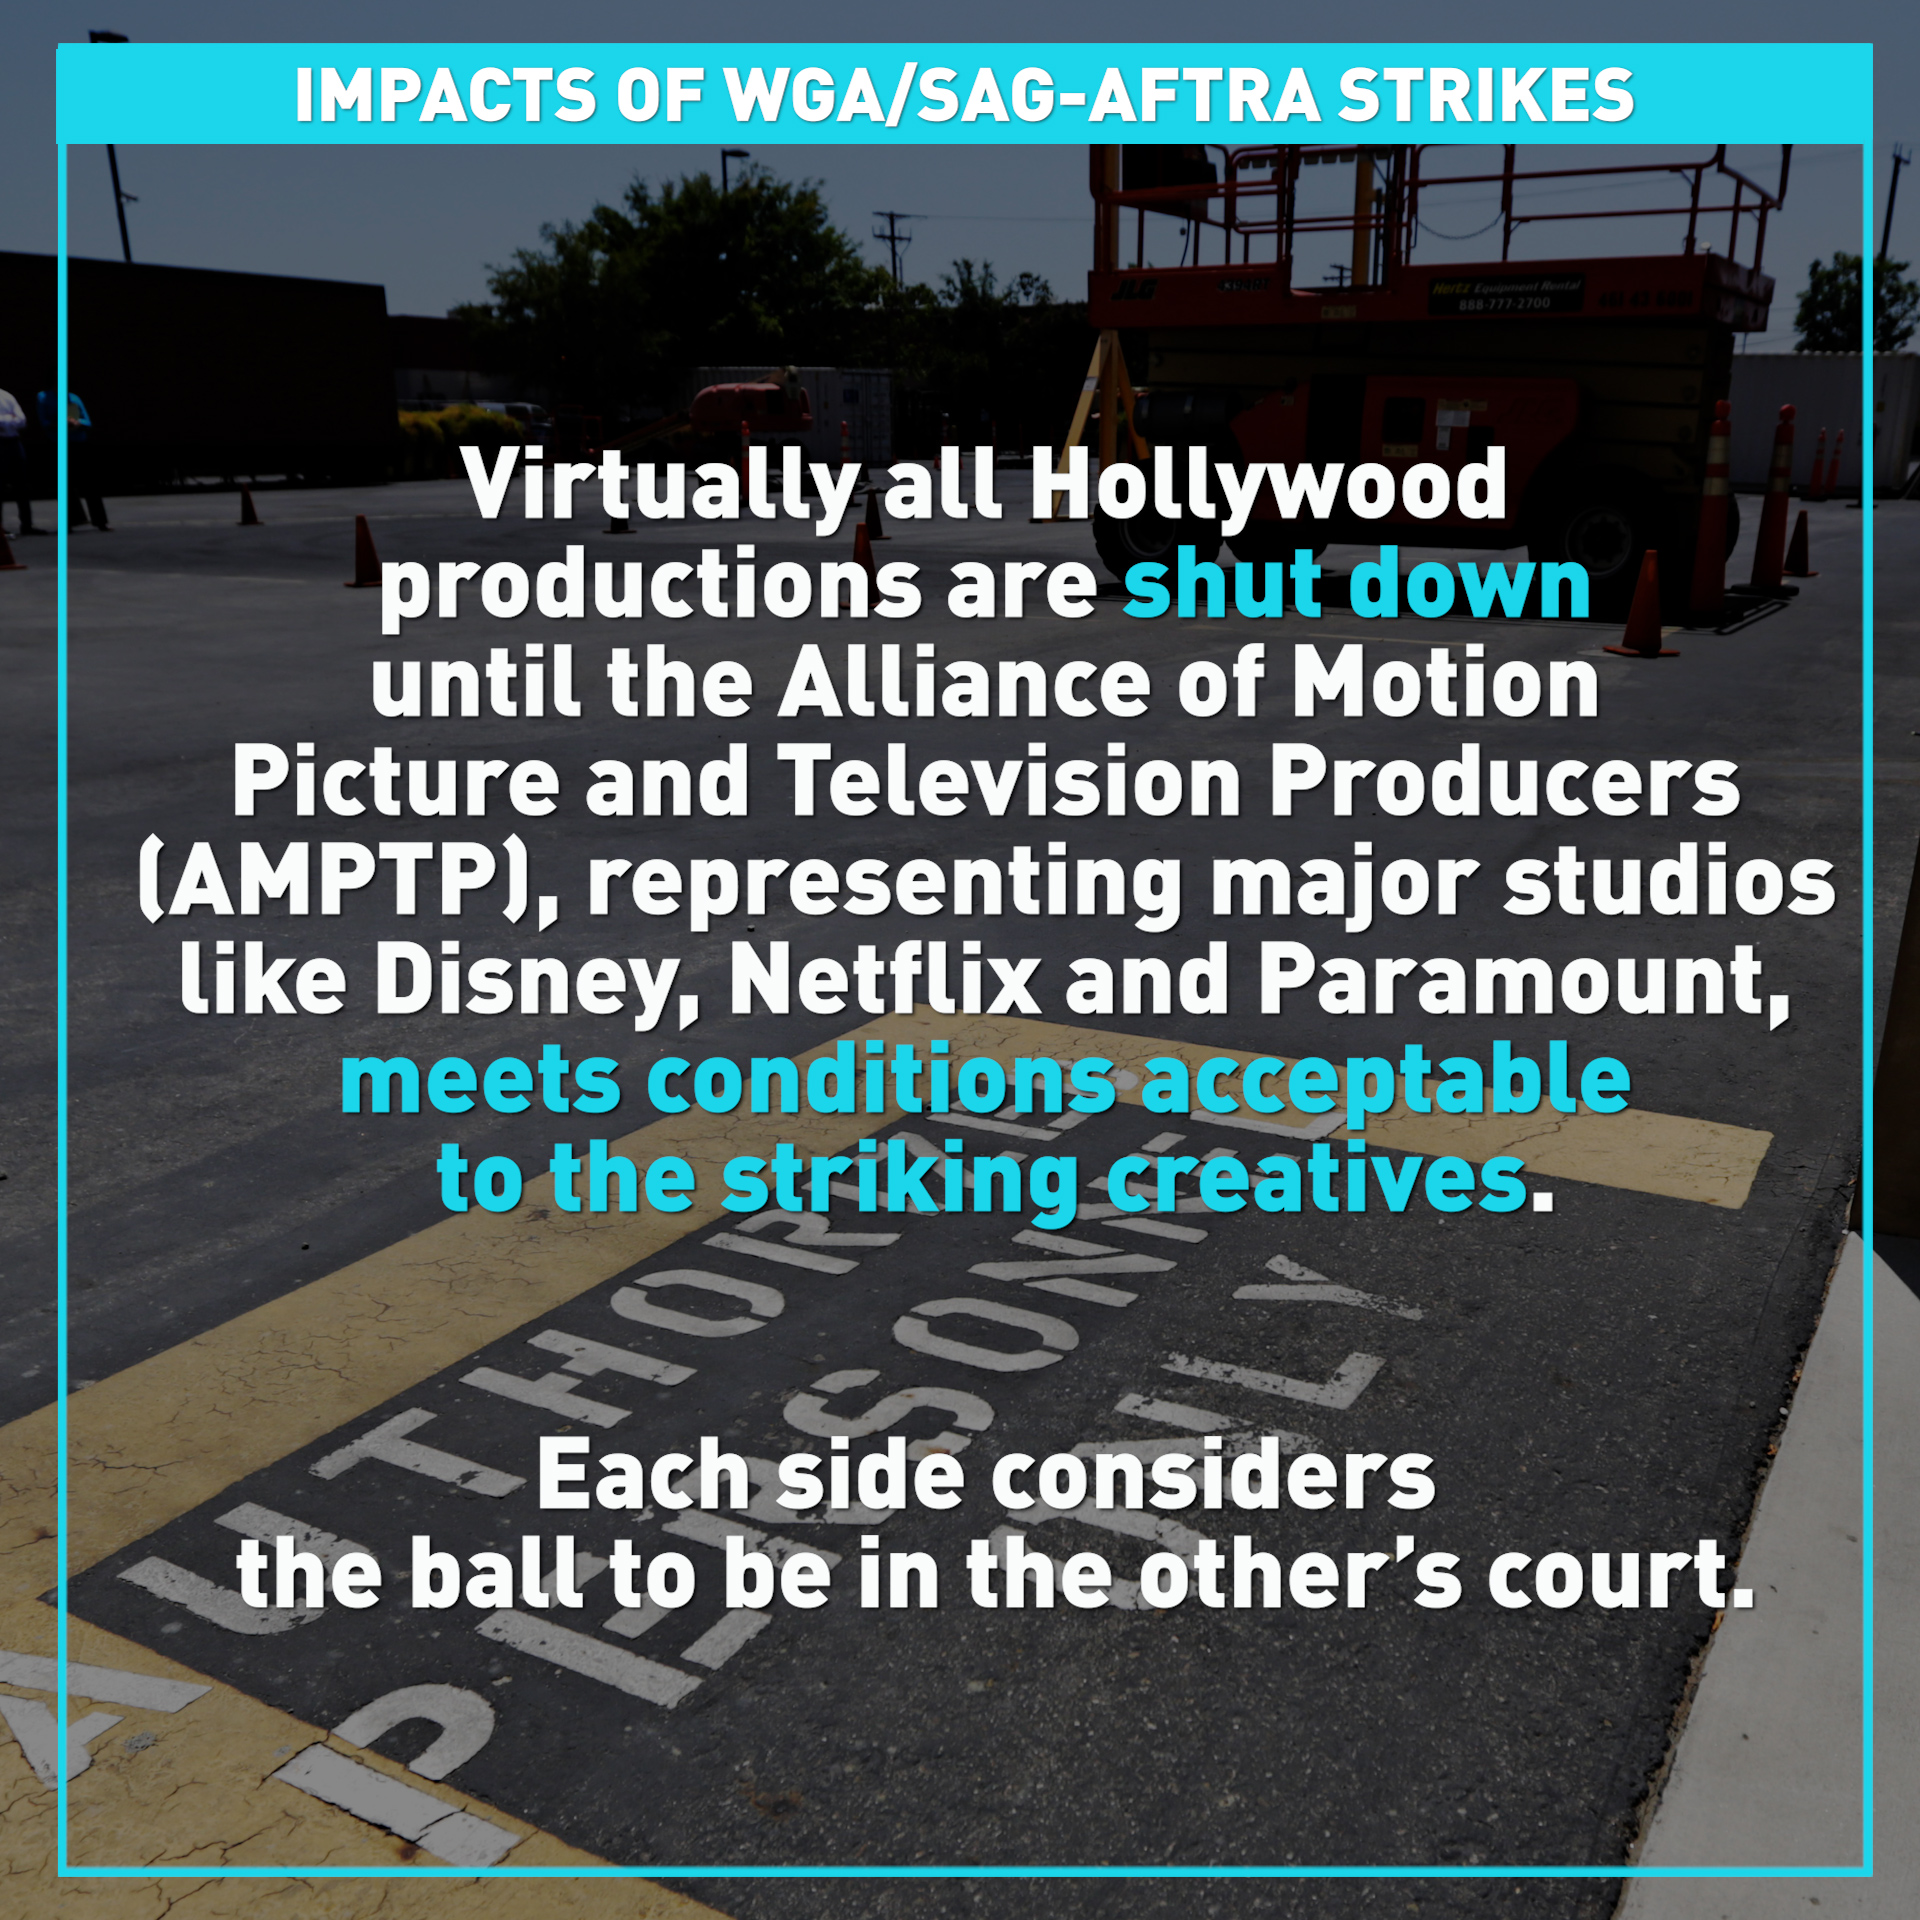  Impact of WGA/ SAG-AFTRA strike ripples through industry